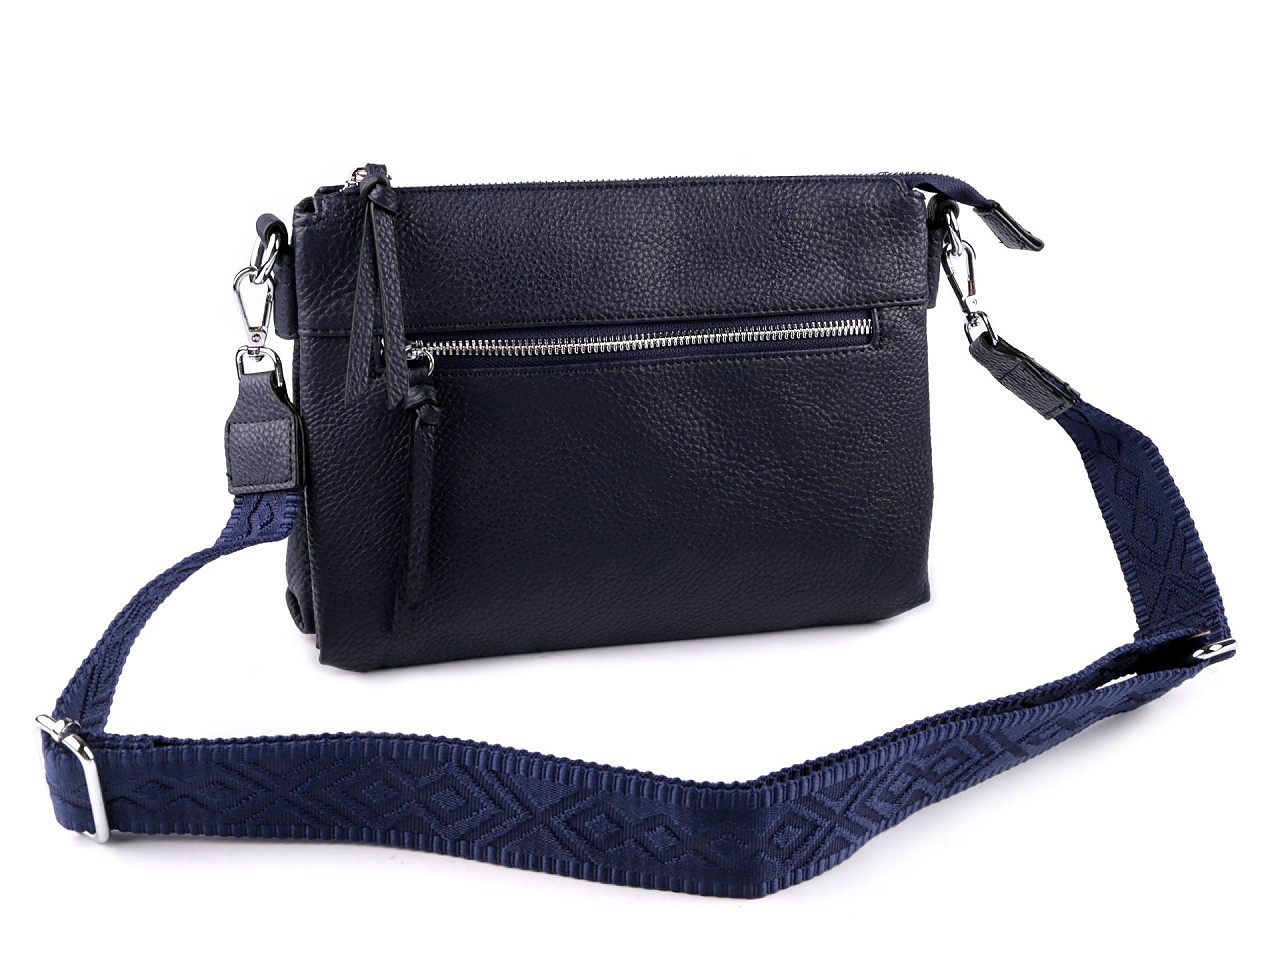 Dámská / dívčí kabelka crossbody s popruhem 28x20 cm, barva 22 modrá tmavá